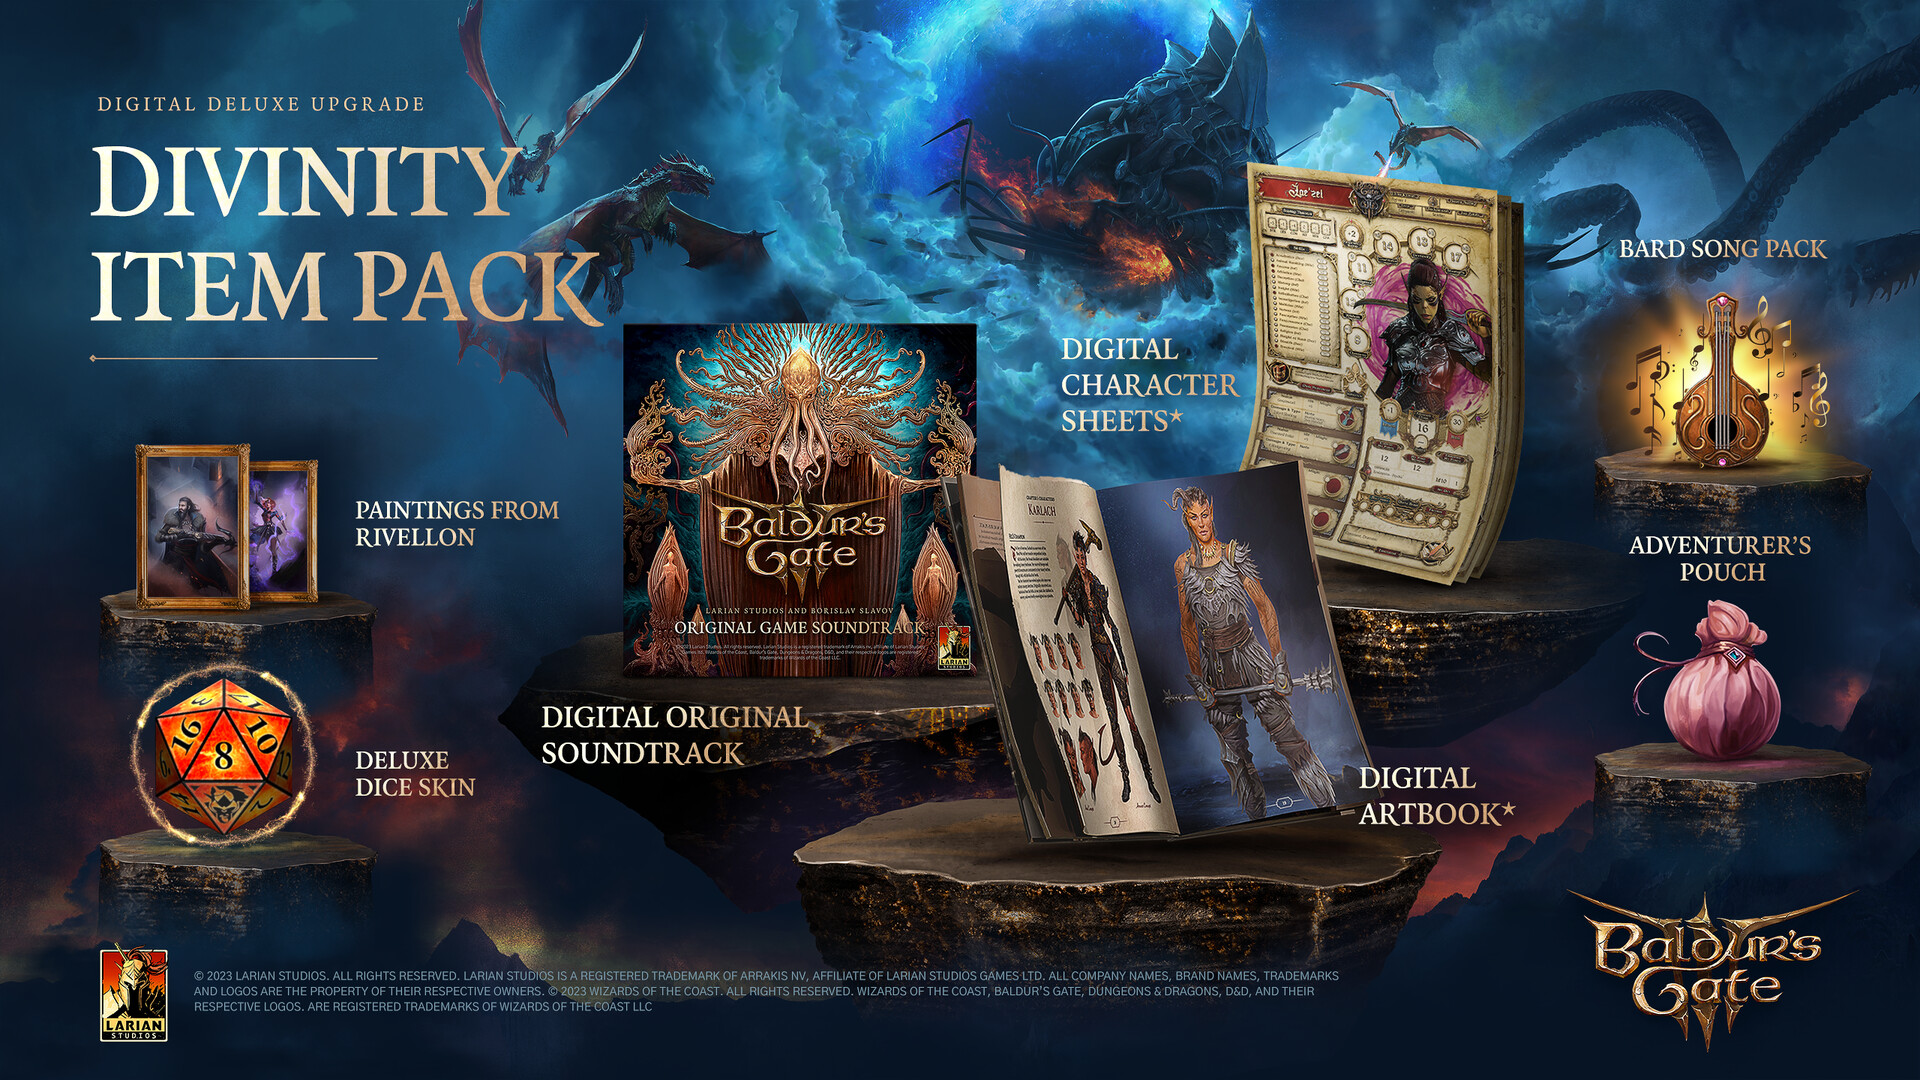 Baldur's Gate 3 - Digital Deluxe Edition DLC on Steam